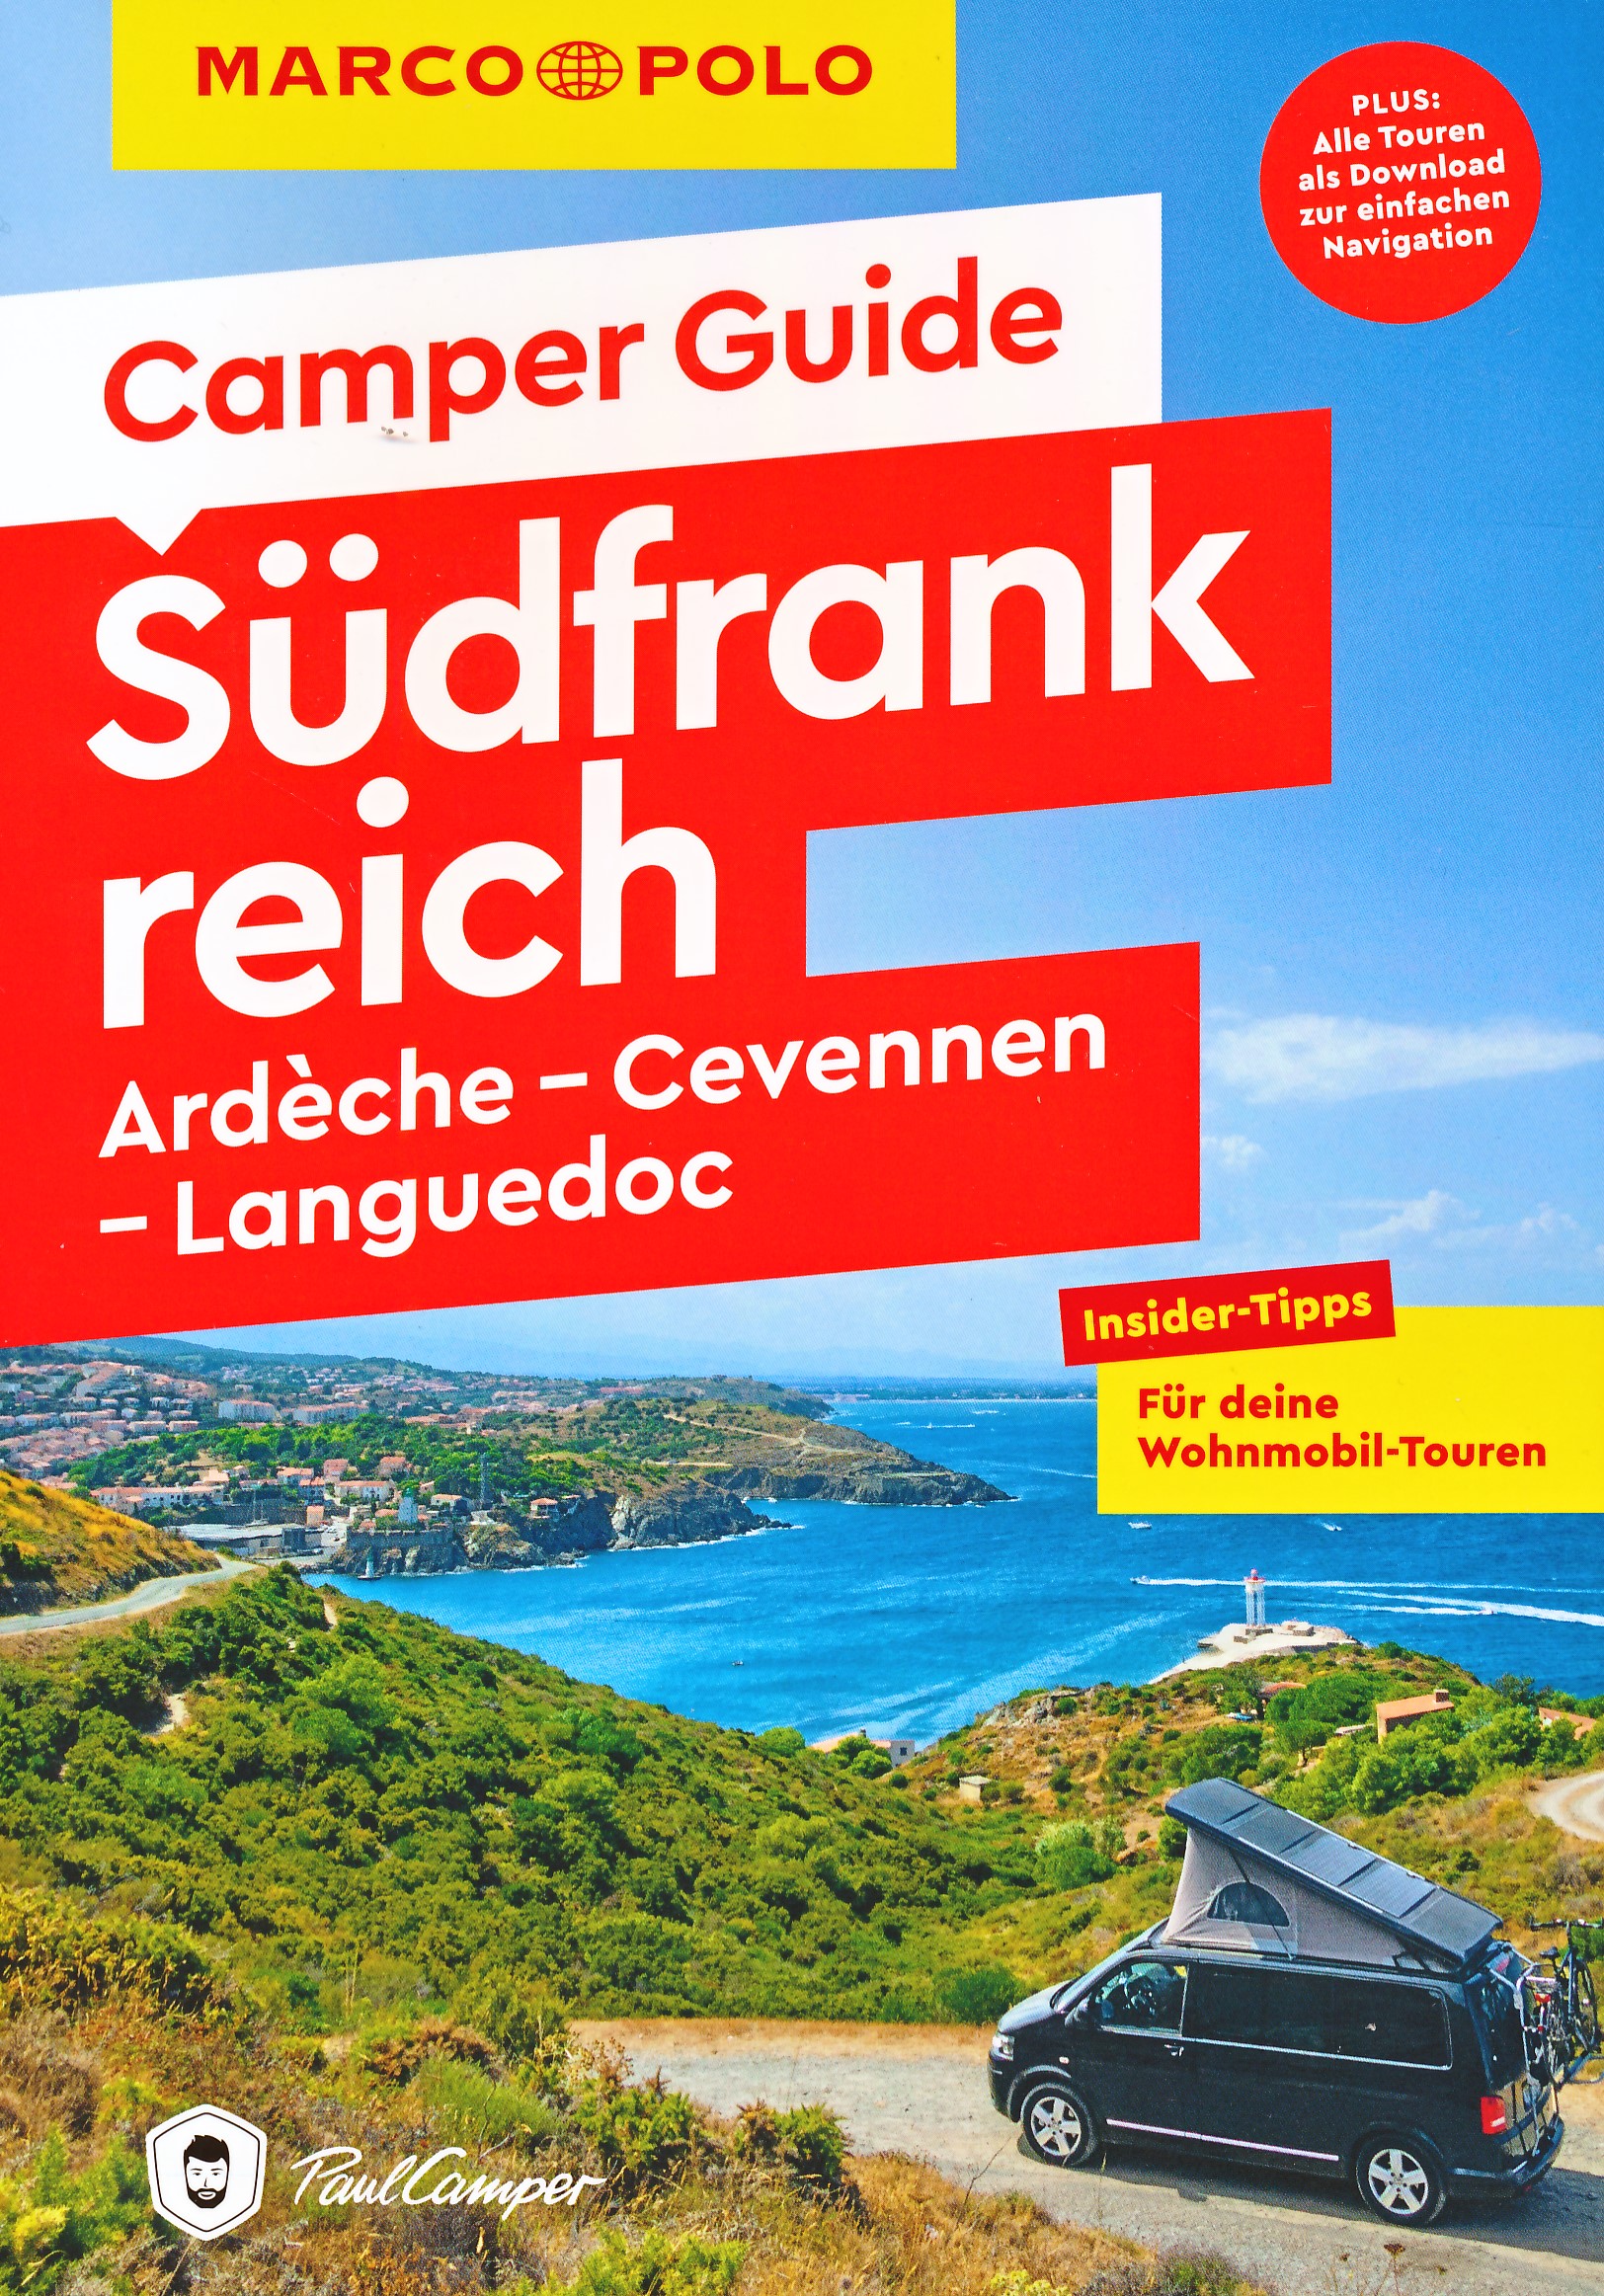 Online bestellen: Campergids Camper Guide Südfrankreich - Ardèche, Cevennen & Languedoc | Marco Polo